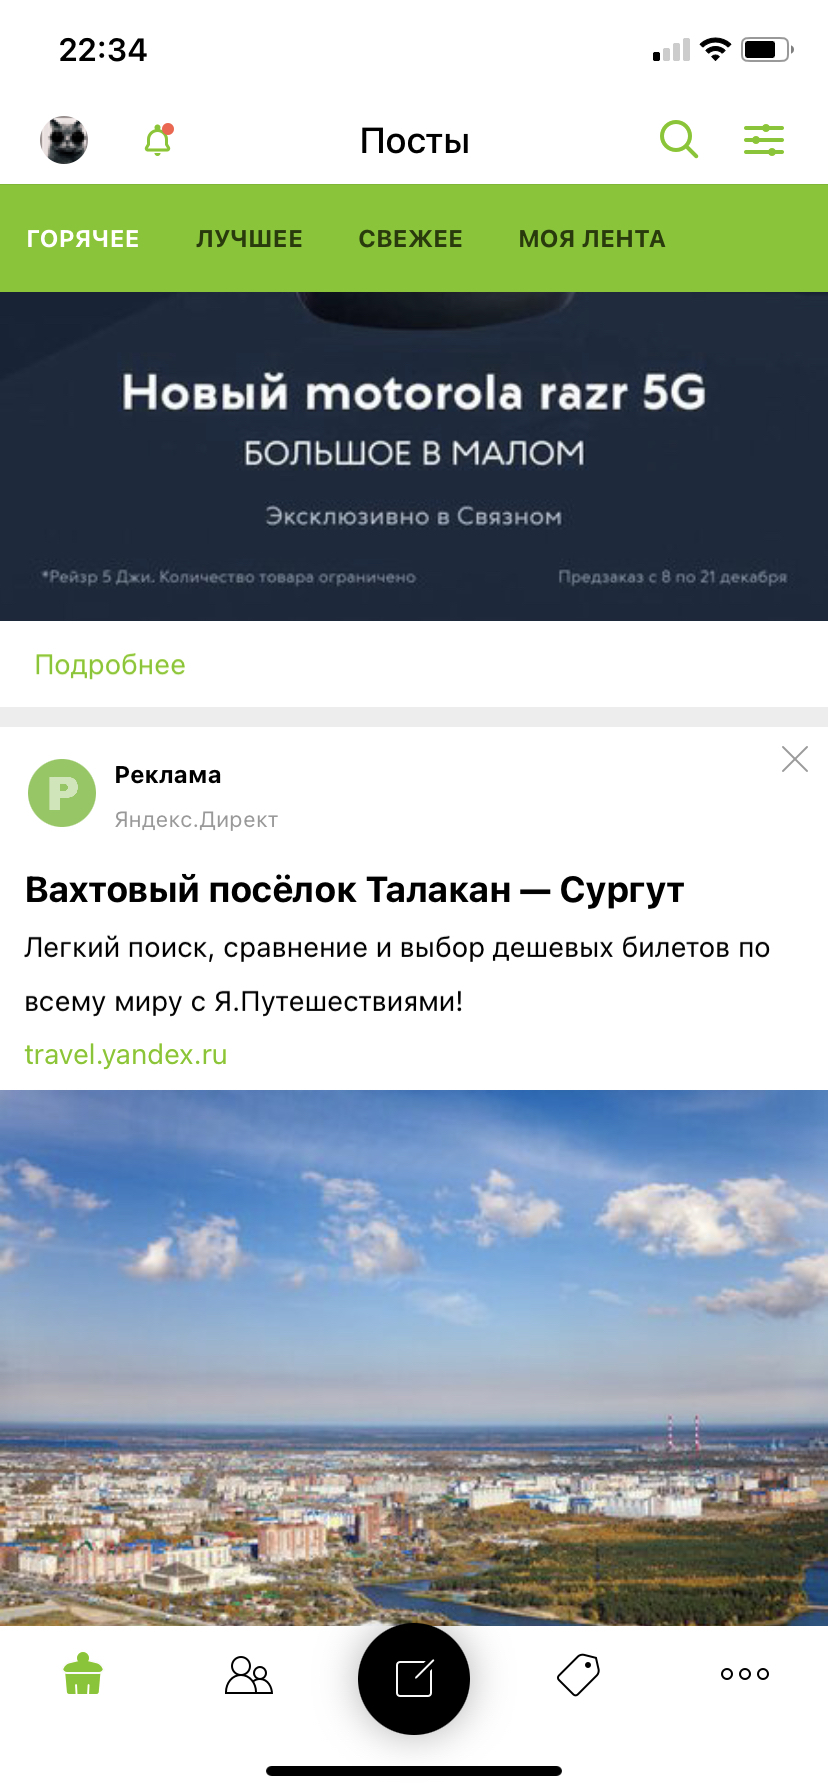 Haven't you gone nuts? - Advertising, Garbage, Yandex., Longpost